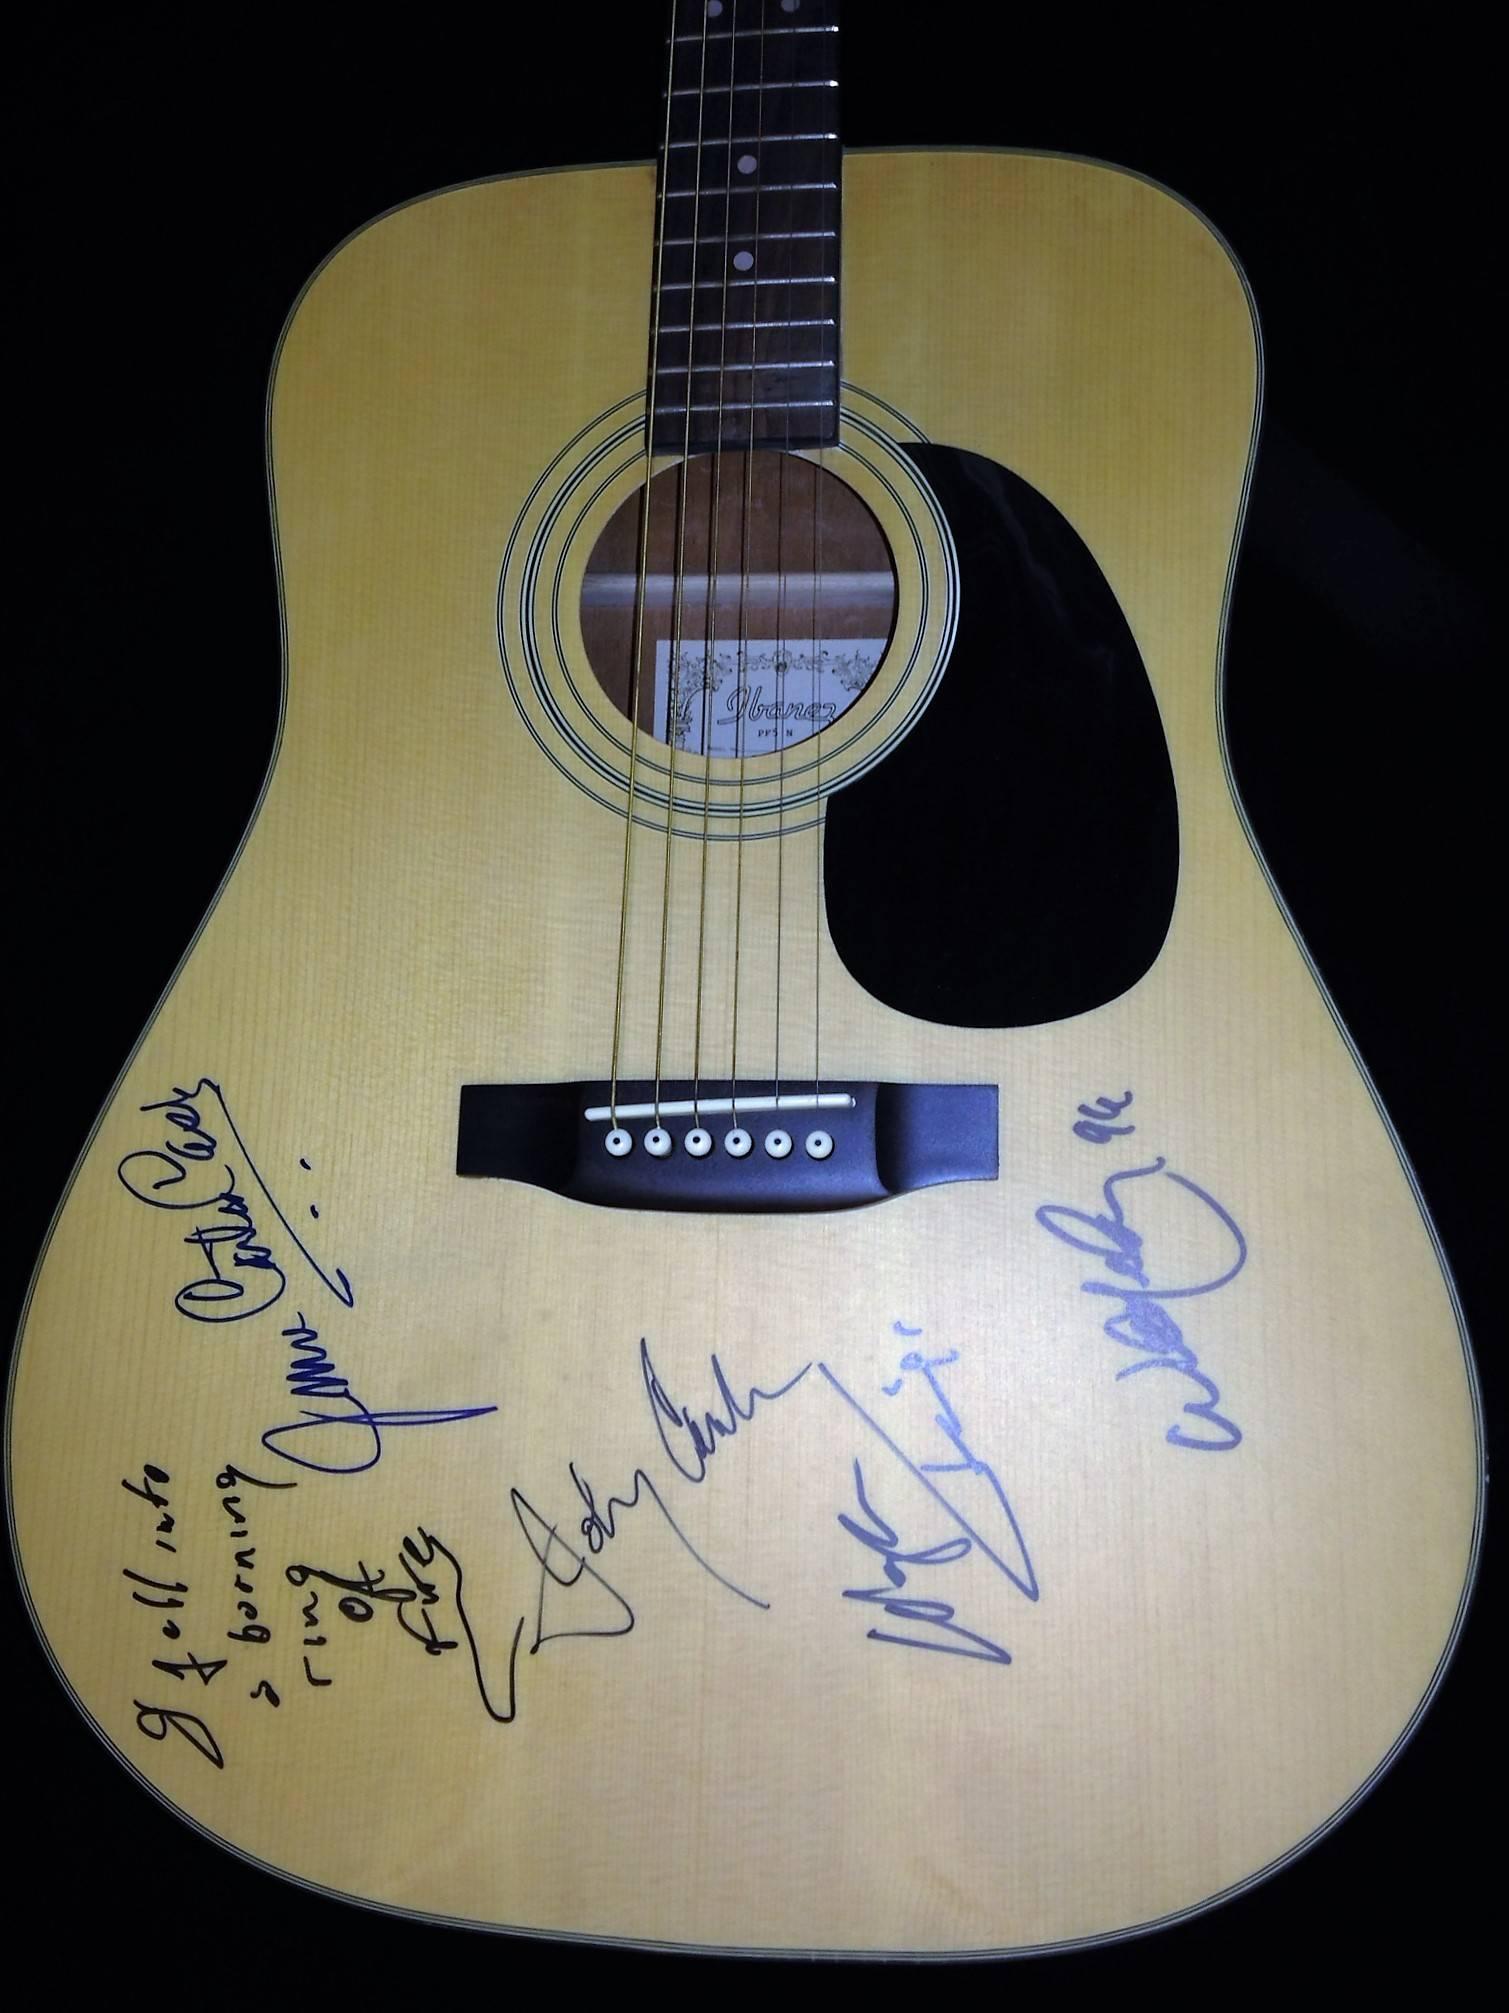 johnny cash signed guitar